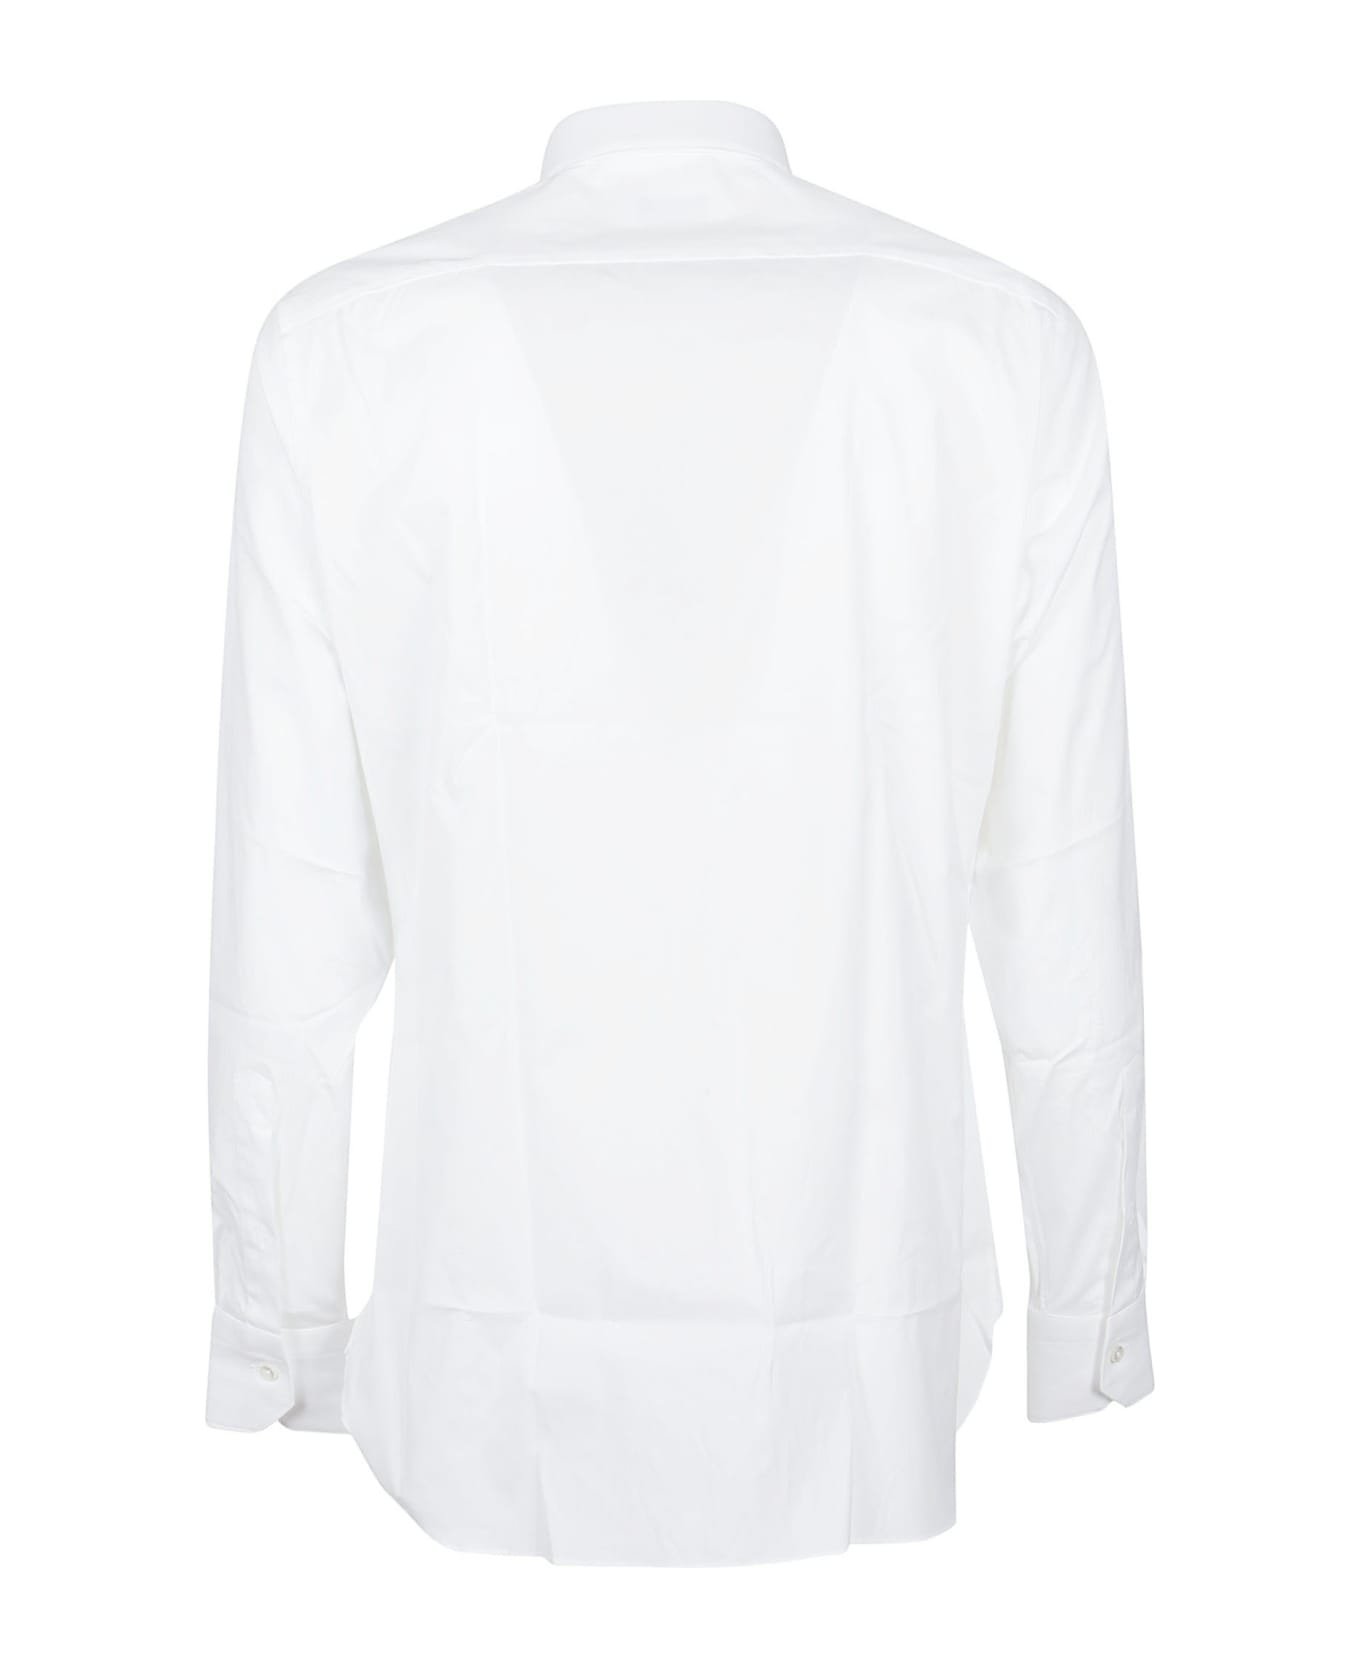 Ermenegildo Zegna Lux Tailoring Long Sleeve Shirt - Bianco